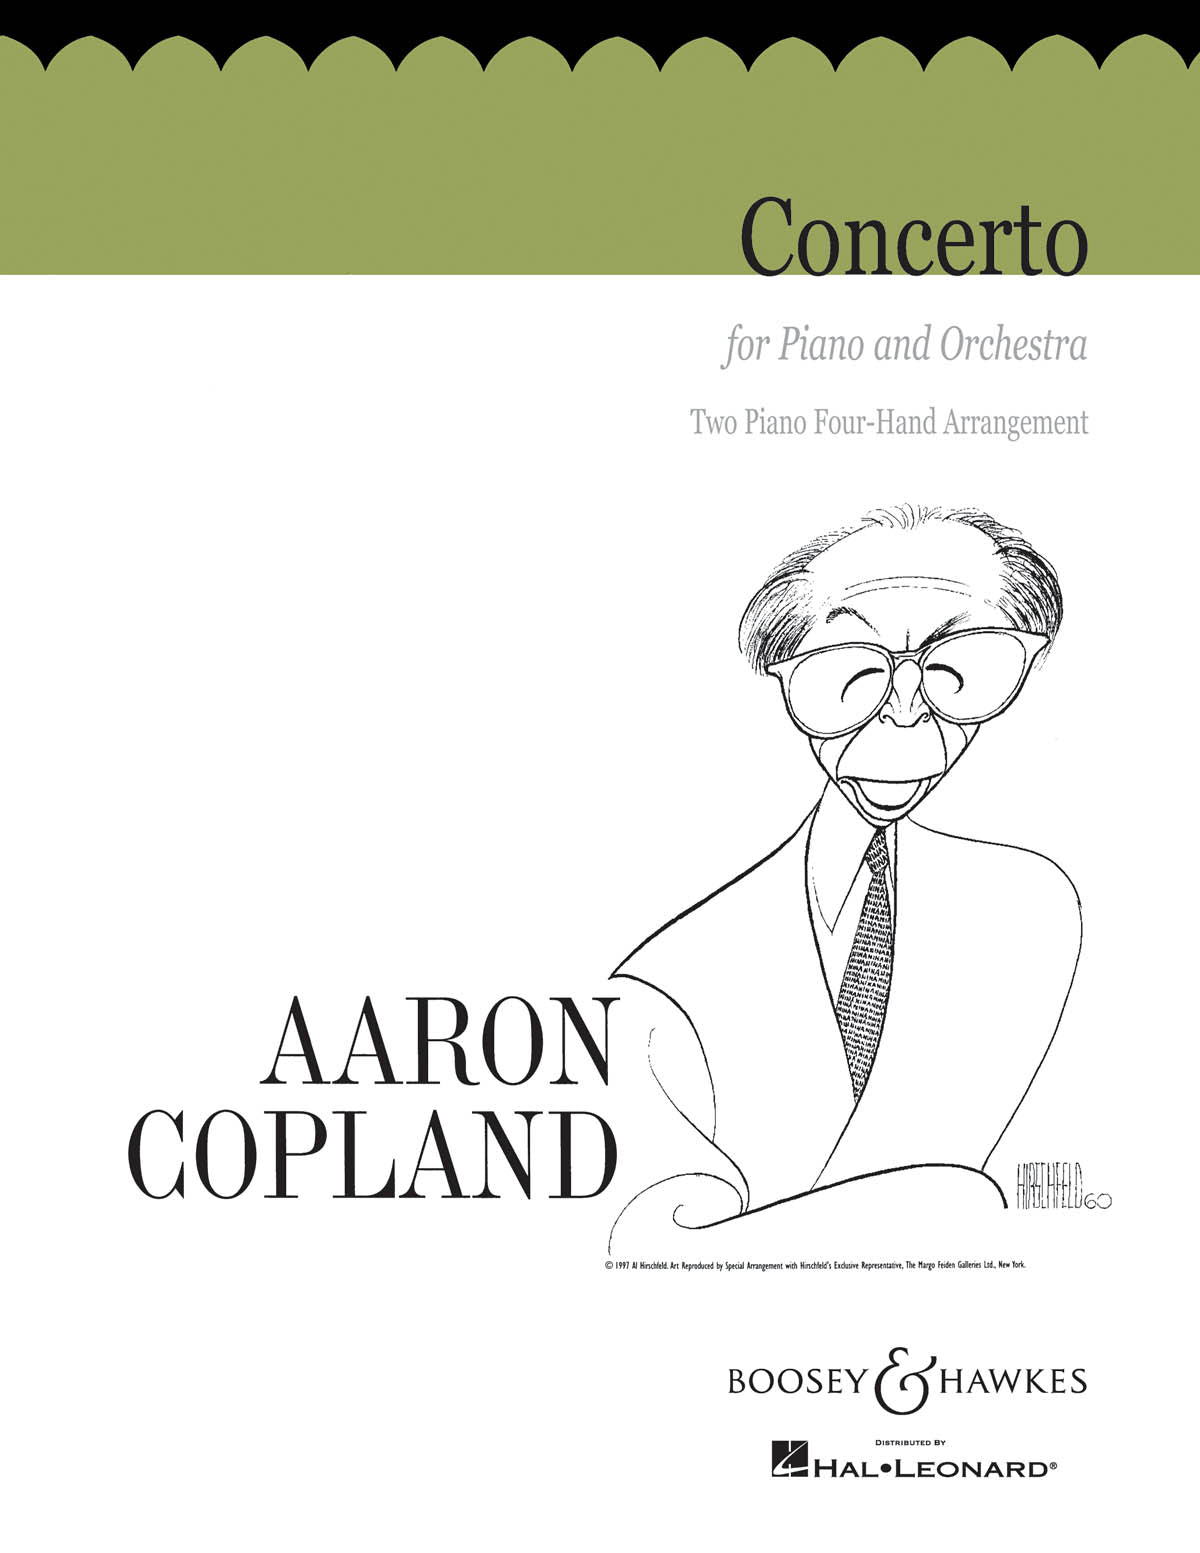 Copland: Piano Concerto